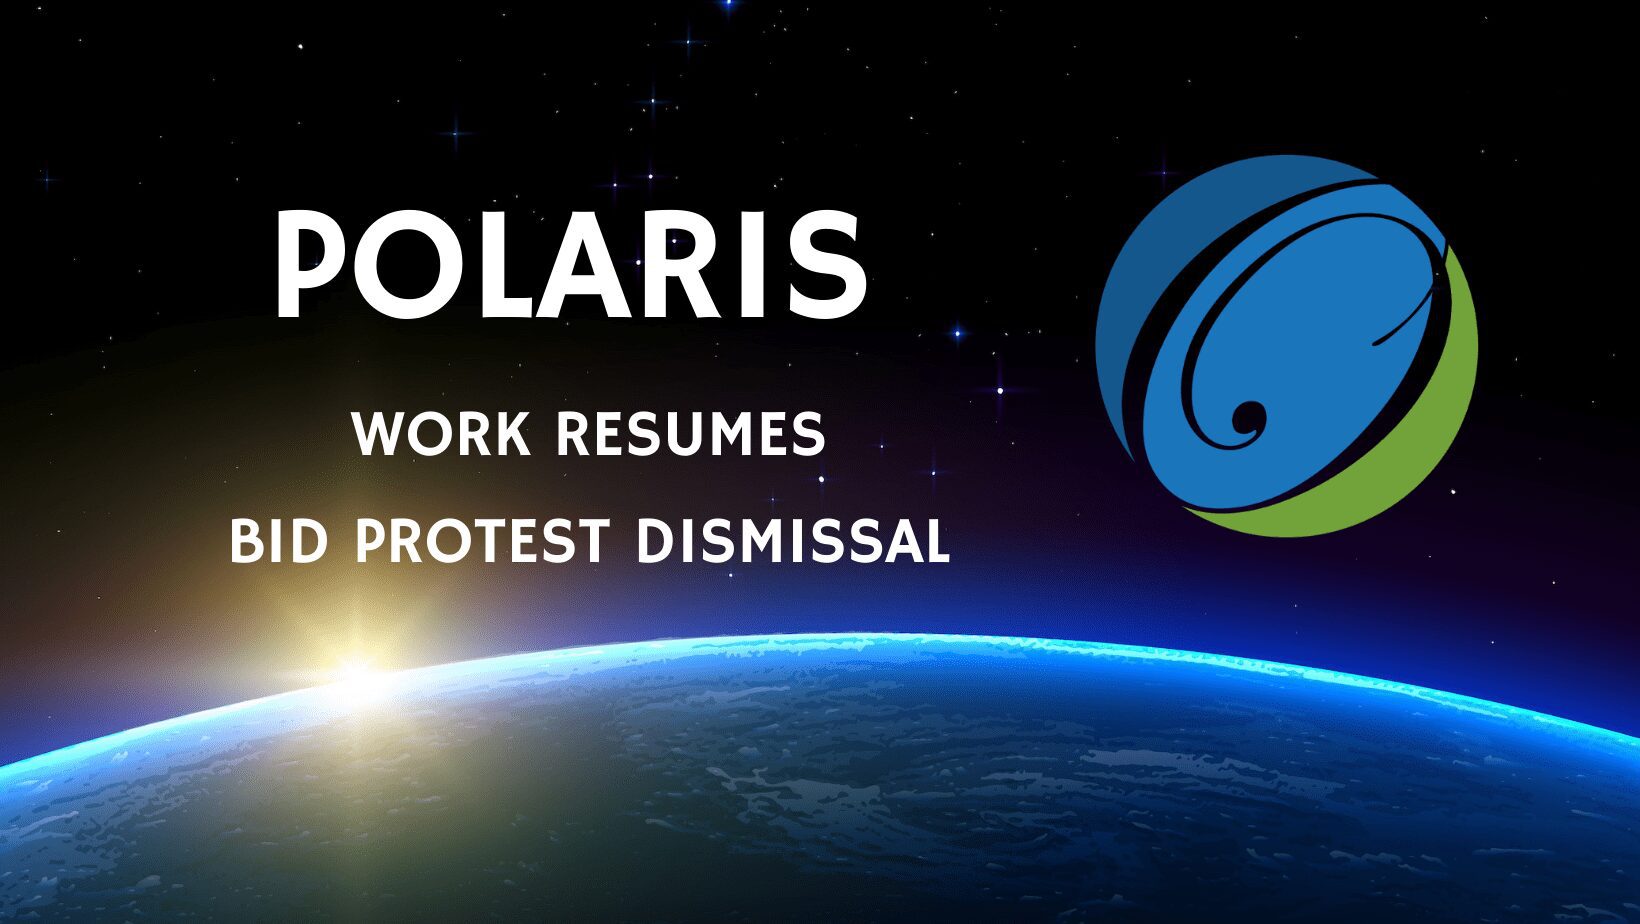 Polaris Work Resumes After Bid Protest Dismissal